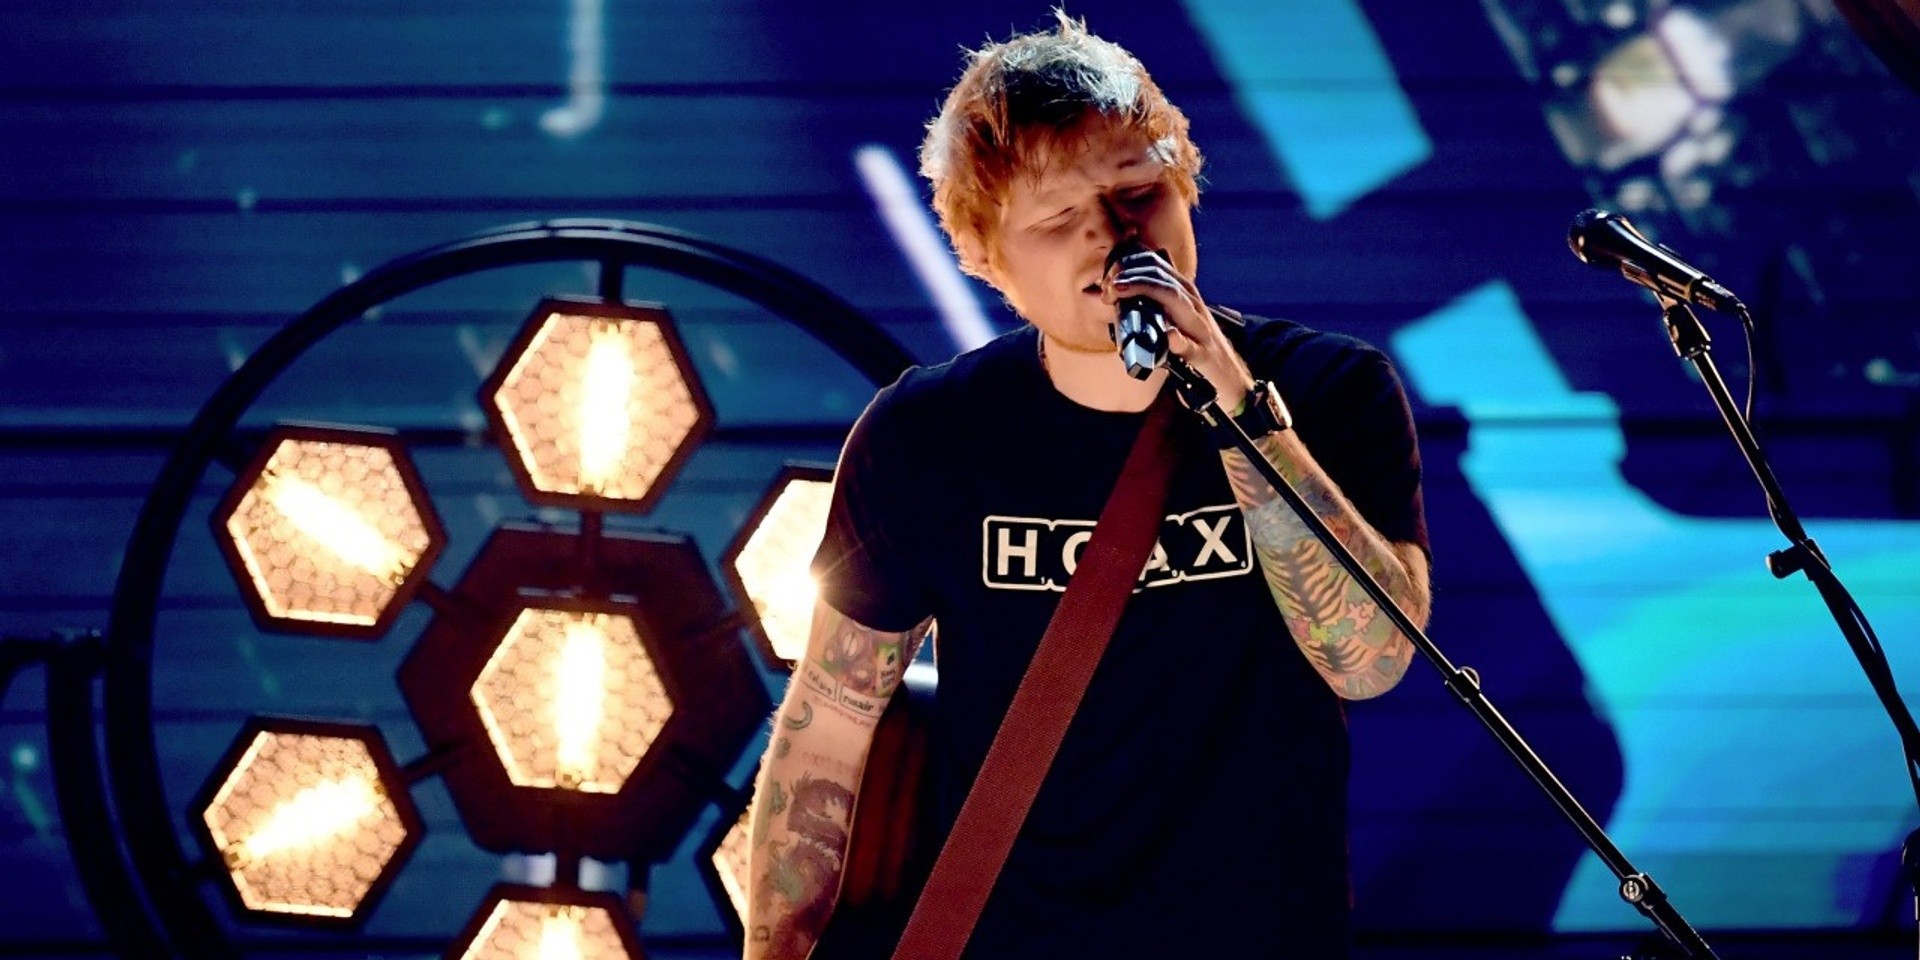 Ed Sheeran confirms MOA Concert Grounds as venue, reveals ticket prices for Manila concert